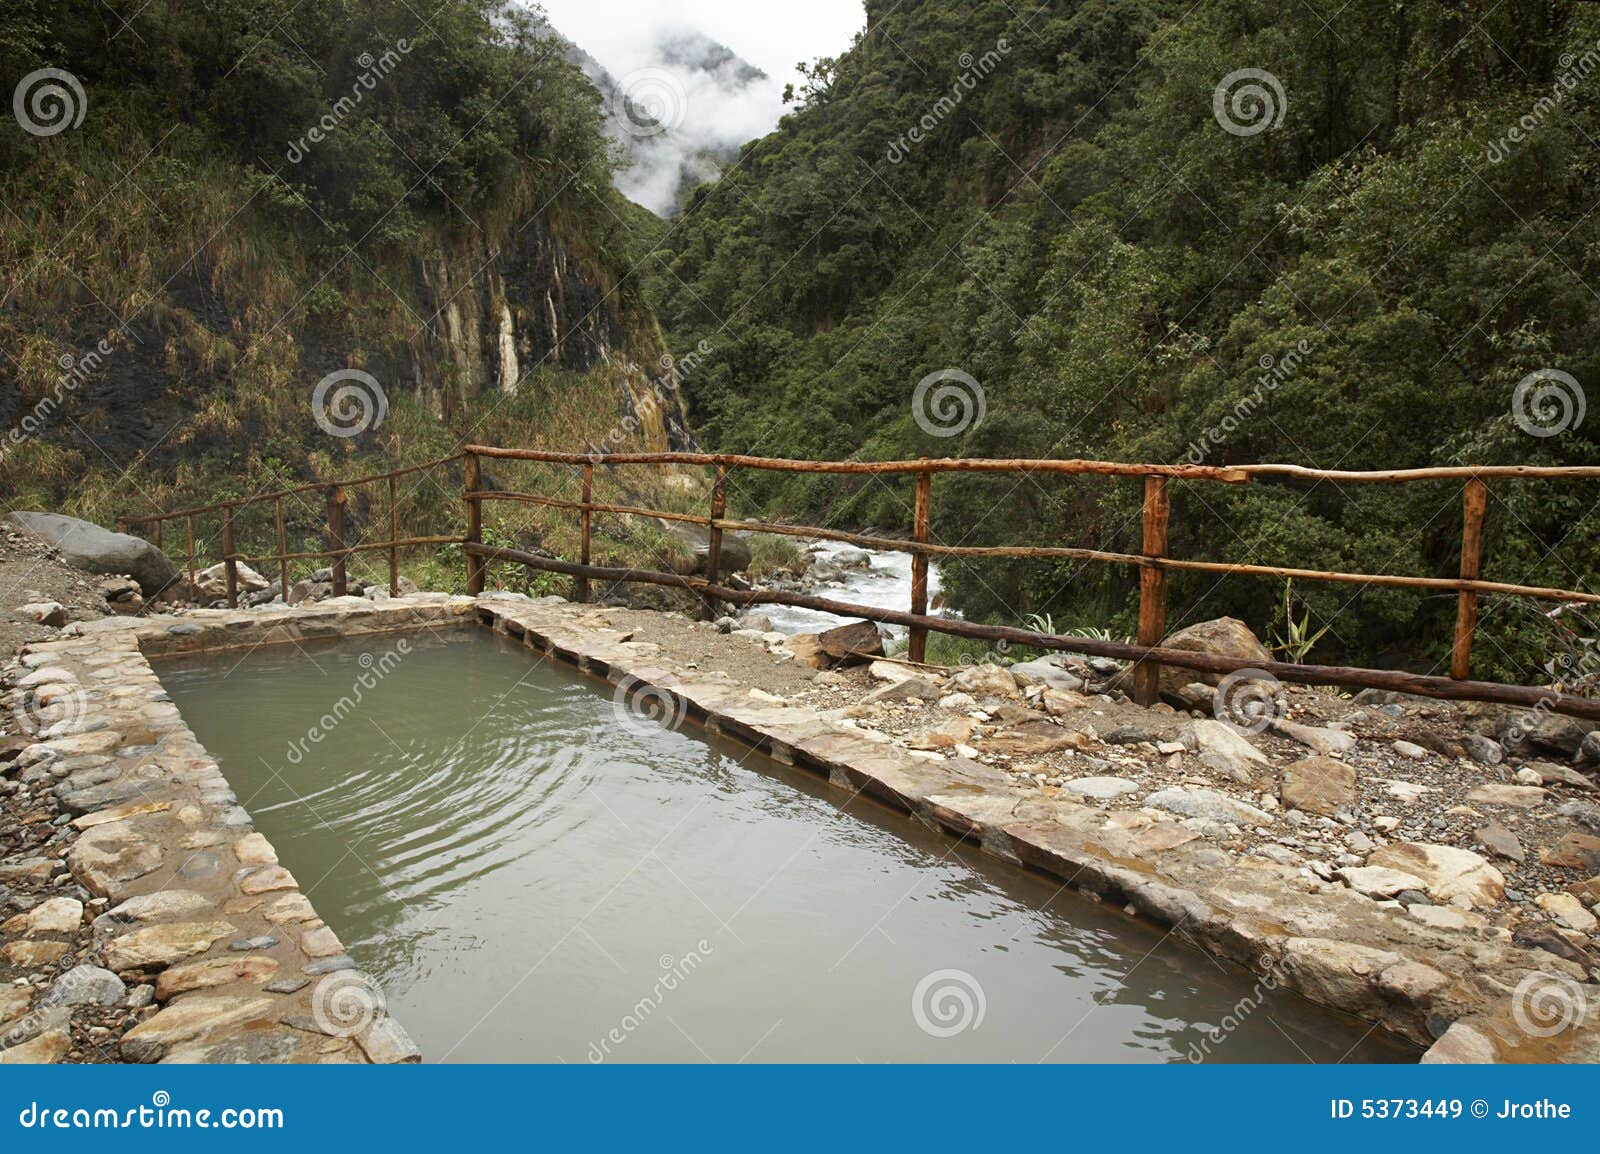 jungle hot spring